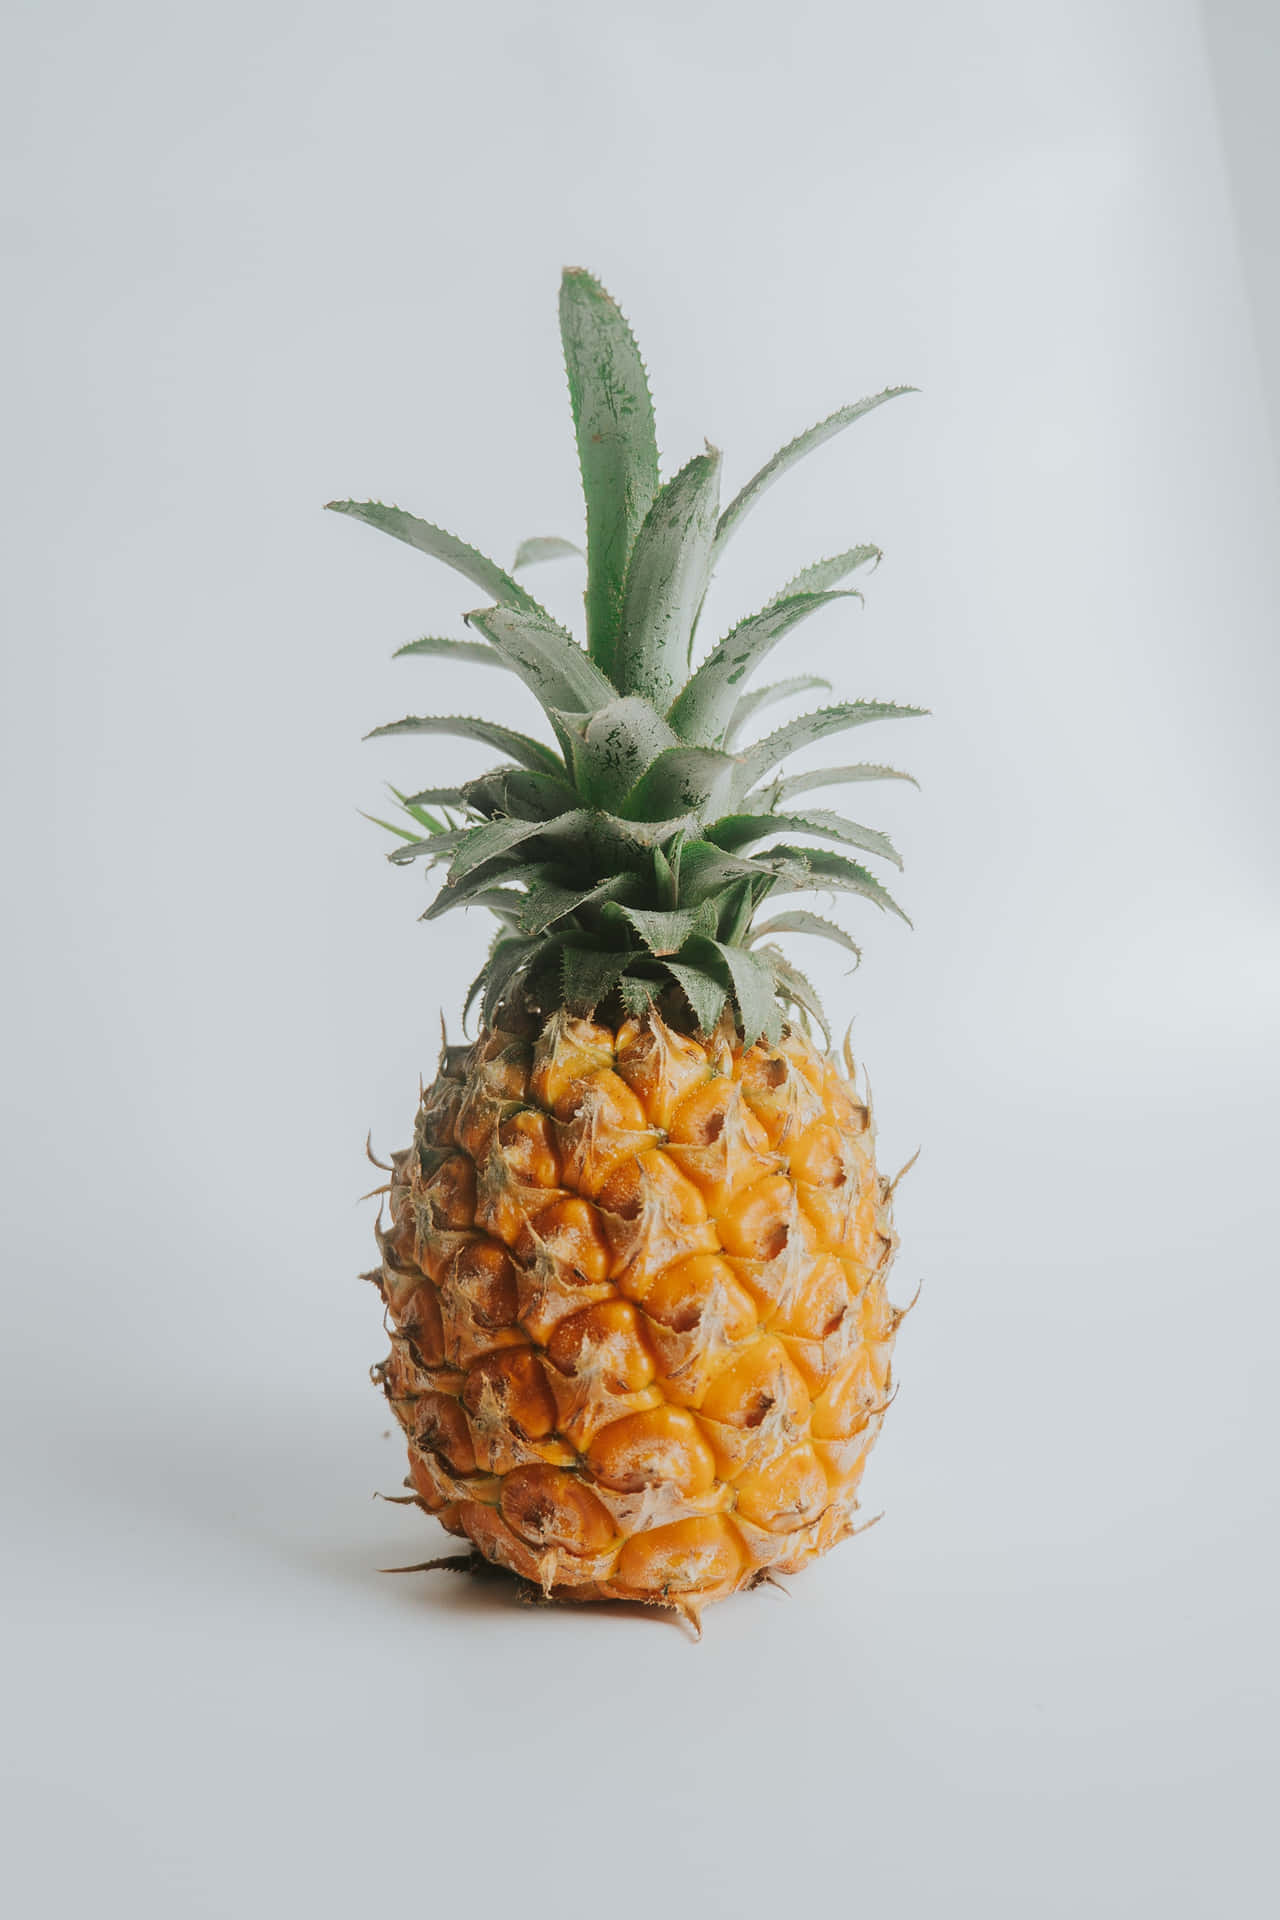 Enjoy the sweetness of pineapple!